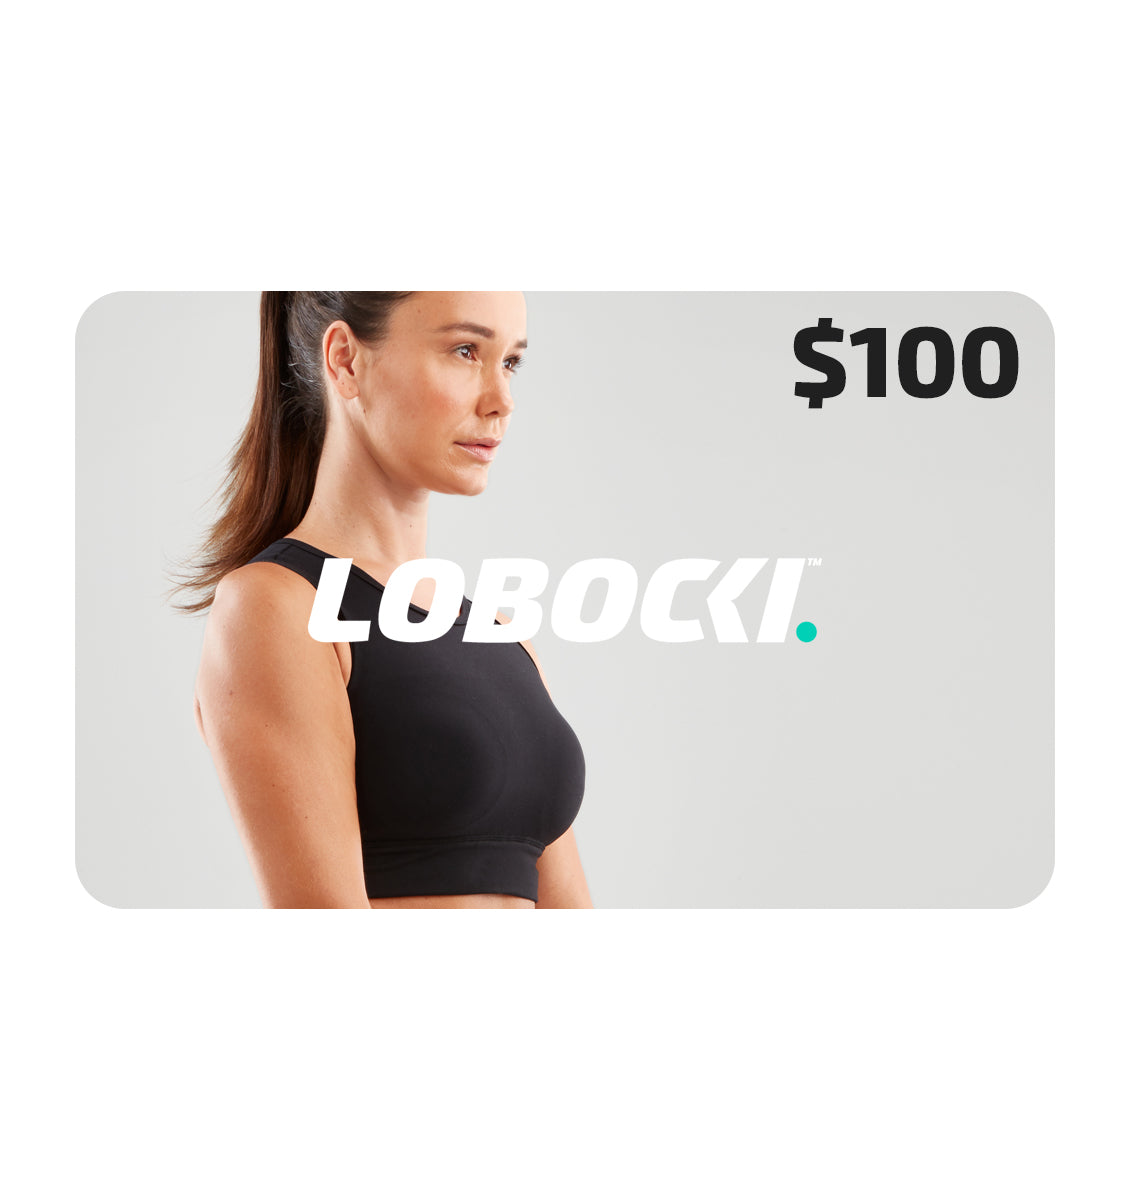 LOBOCKI $100 Gift Card